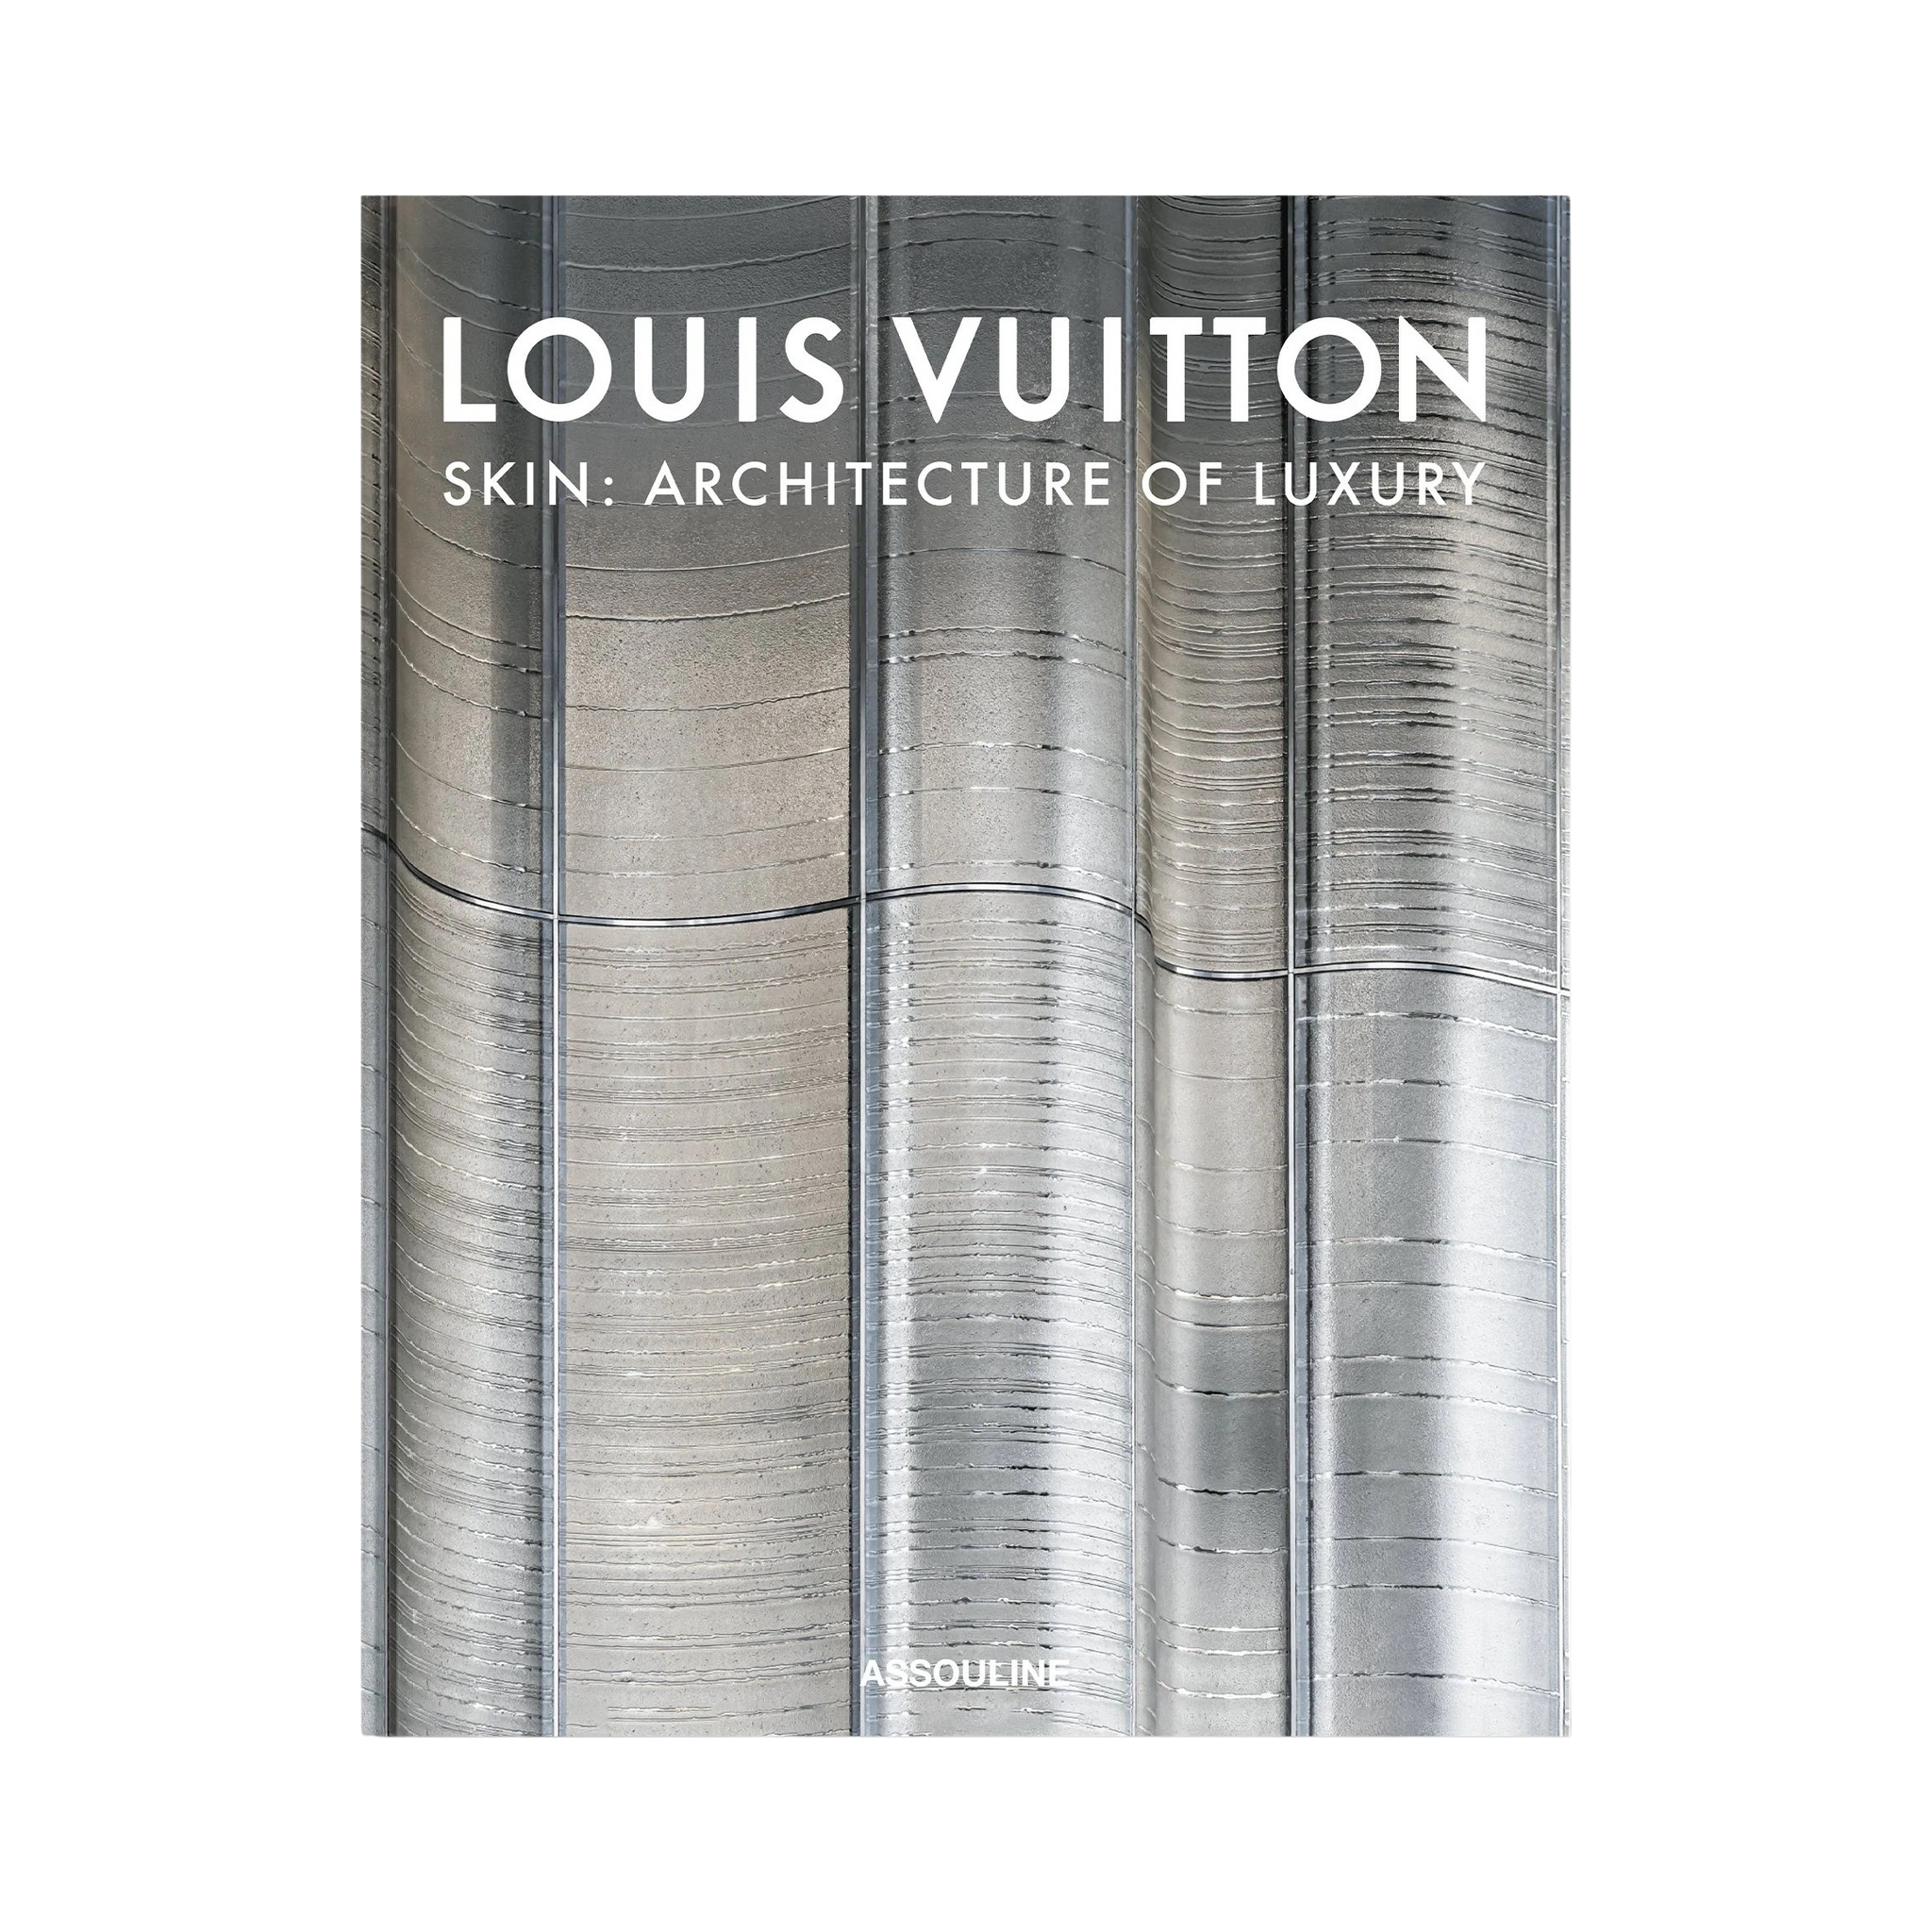 Coffeetable book - Louis Vuitton -Catwalk